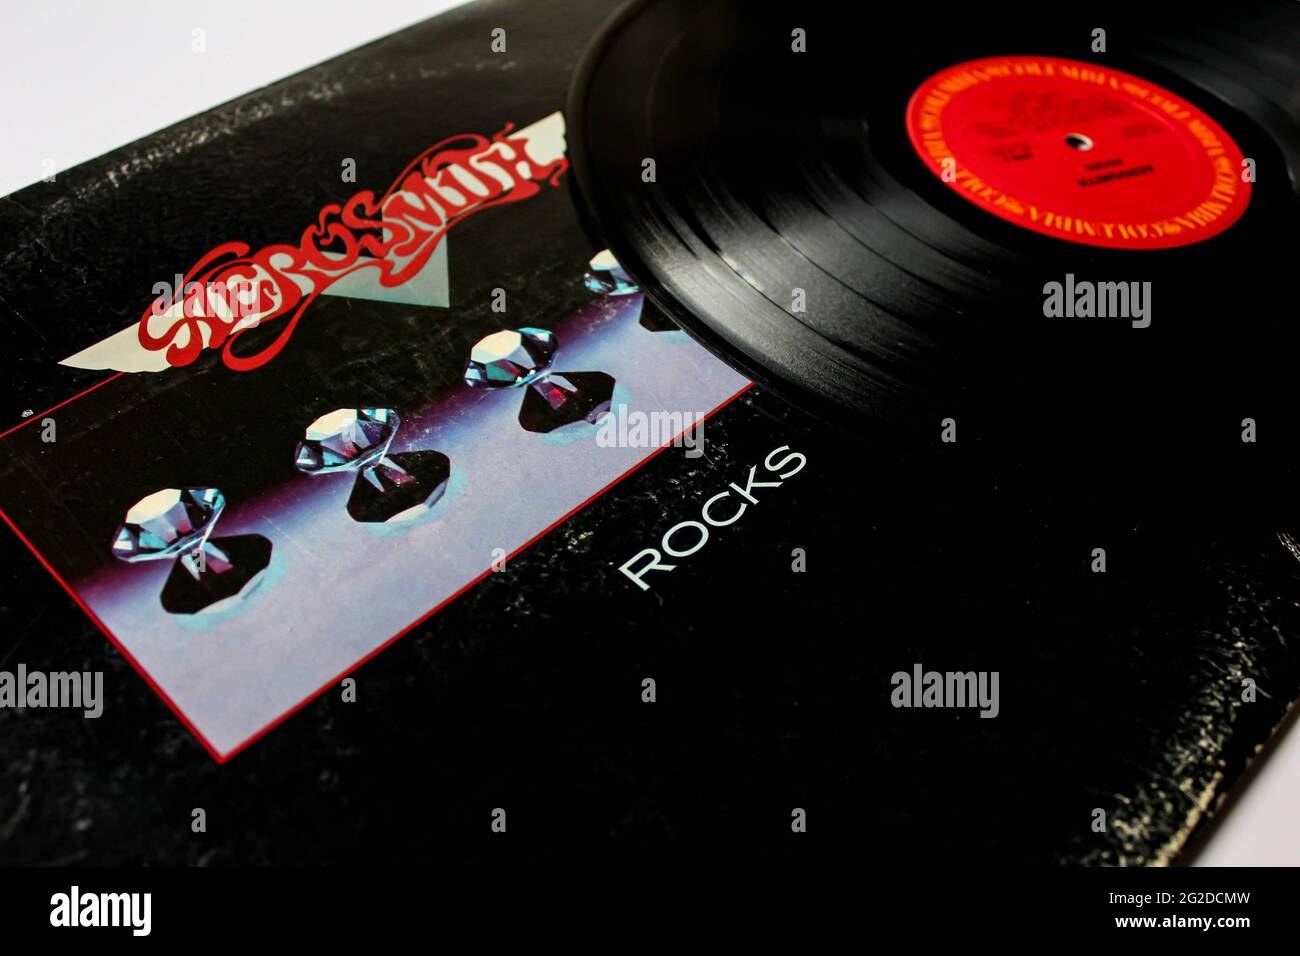 Klassische Rockband, Aerosmith, Musikalbum auf Vinyl-Schallplatte. Titel: Rocks Album Cover Stockfoto